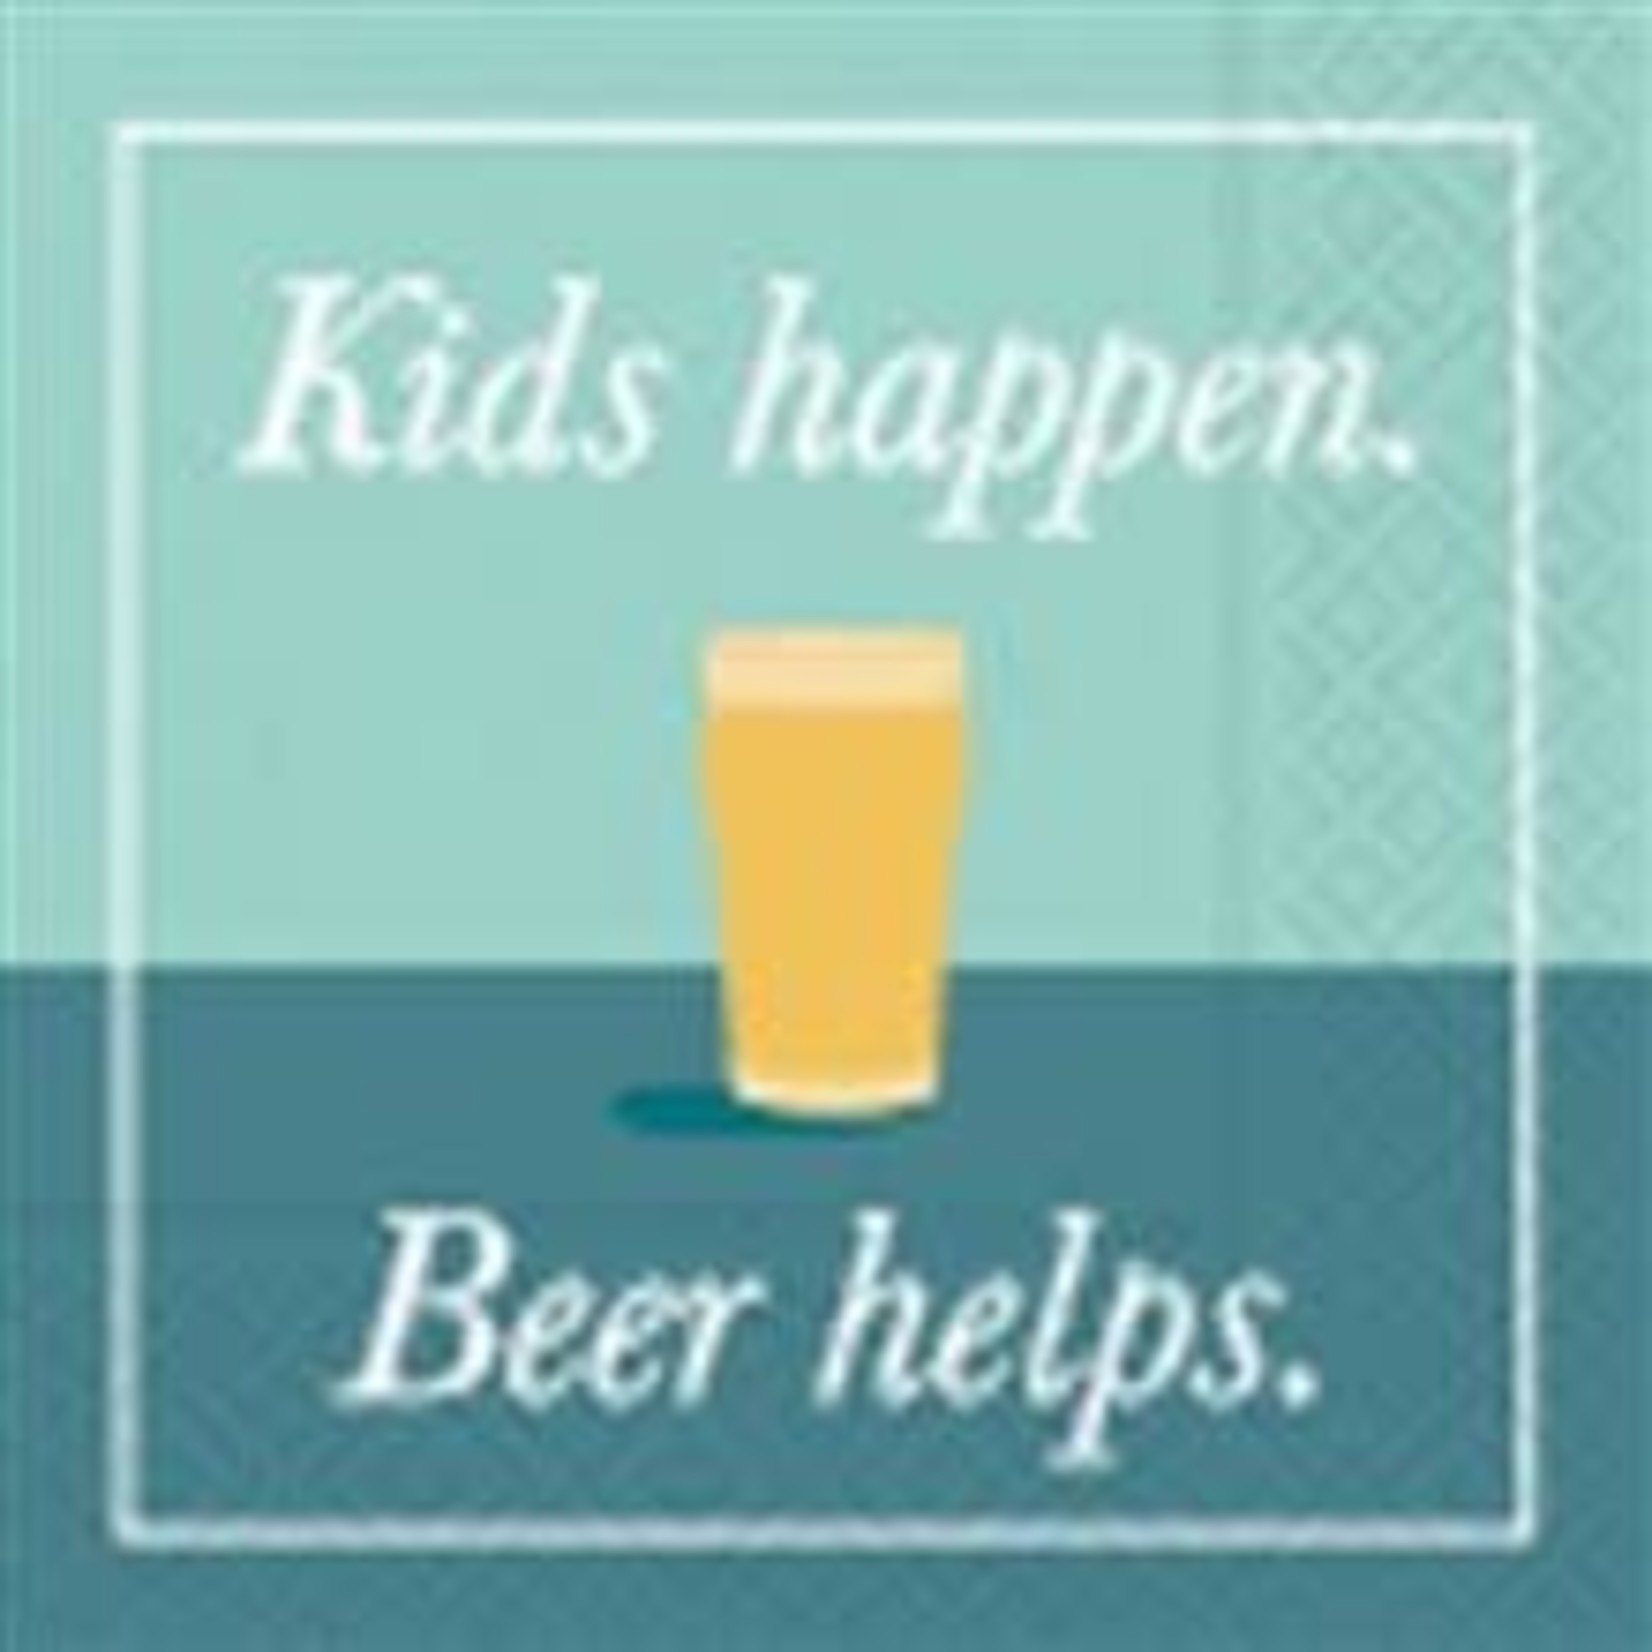 design design Kids Happen. Beer Helps. Cocktail Napkins - 20ct.